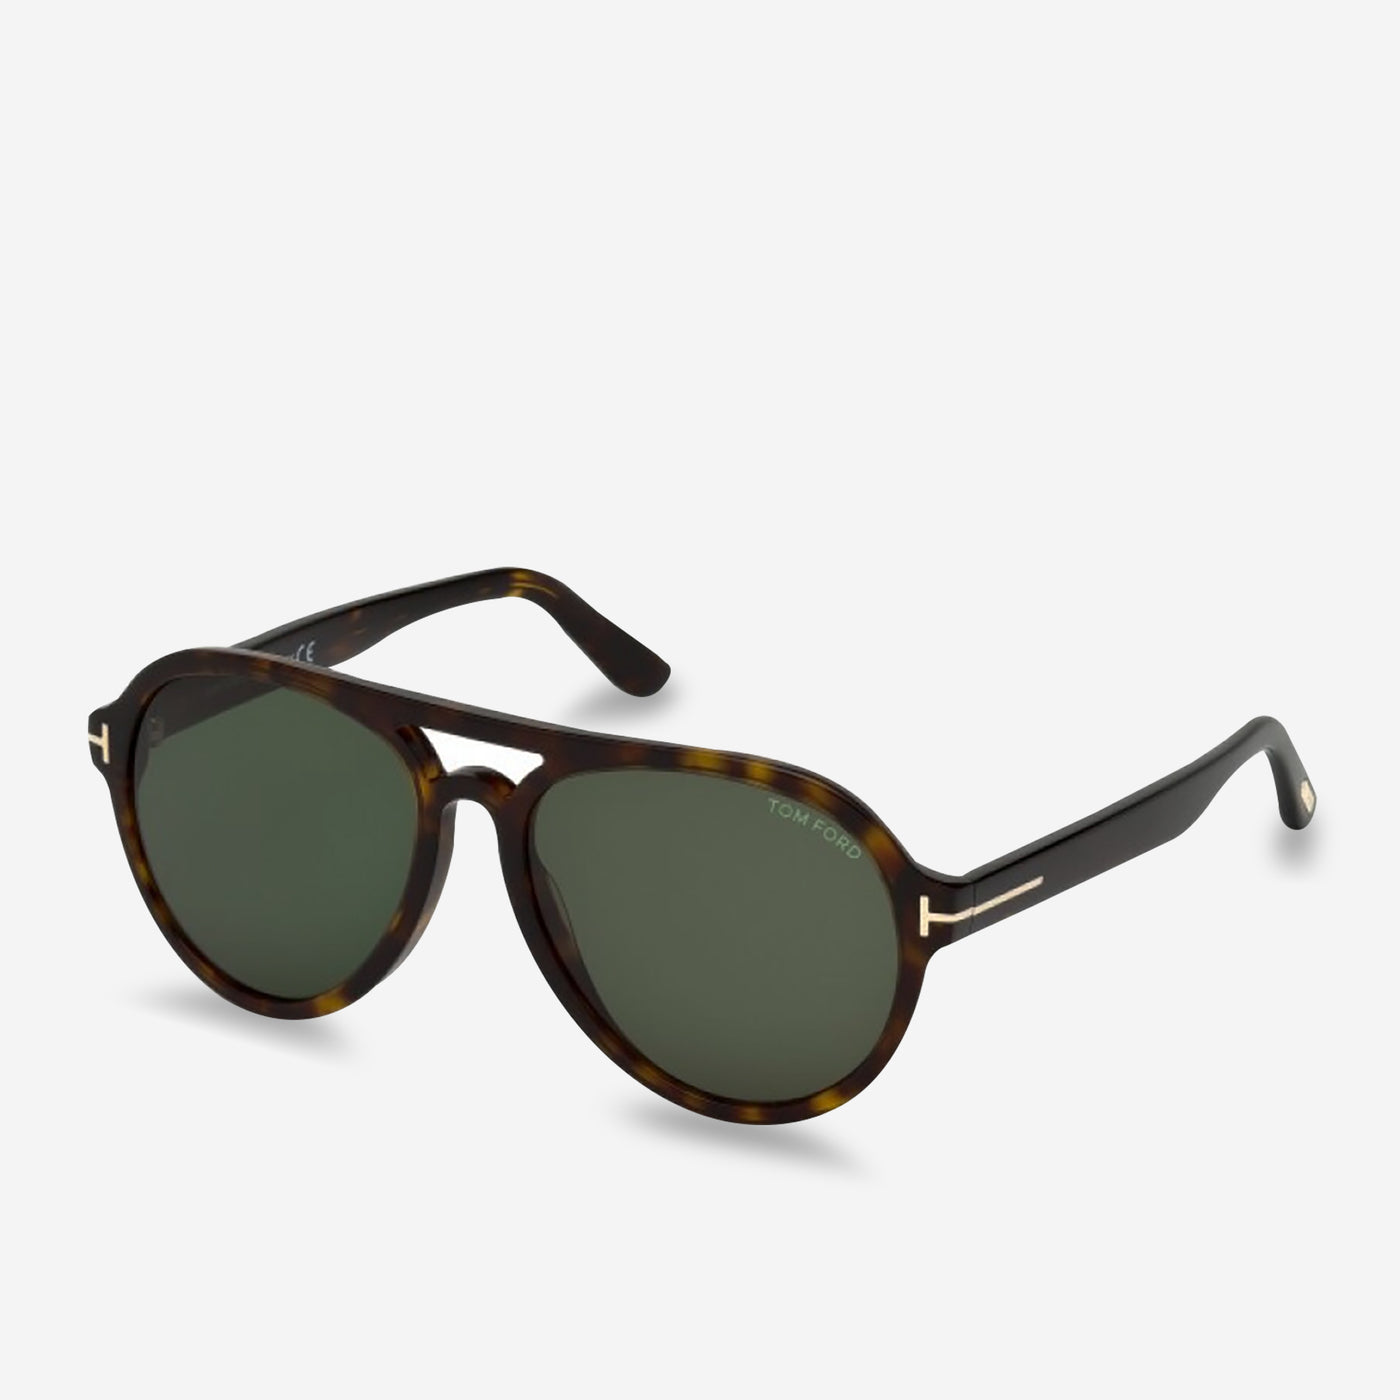 Tom Ford 02 Sunglasses